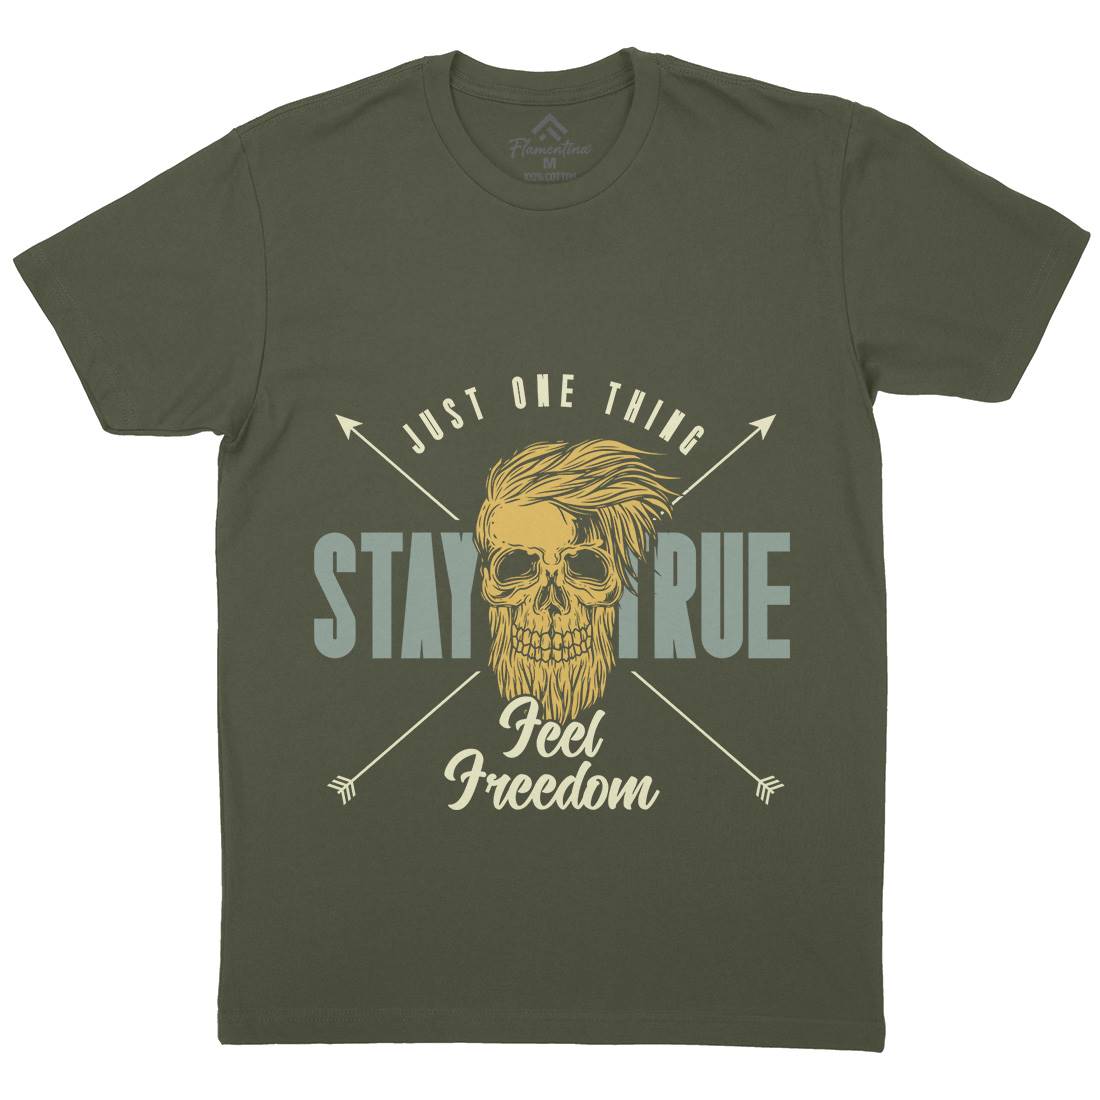 Stay True Mens Organic Crew Neck T-Shirt Barber C851